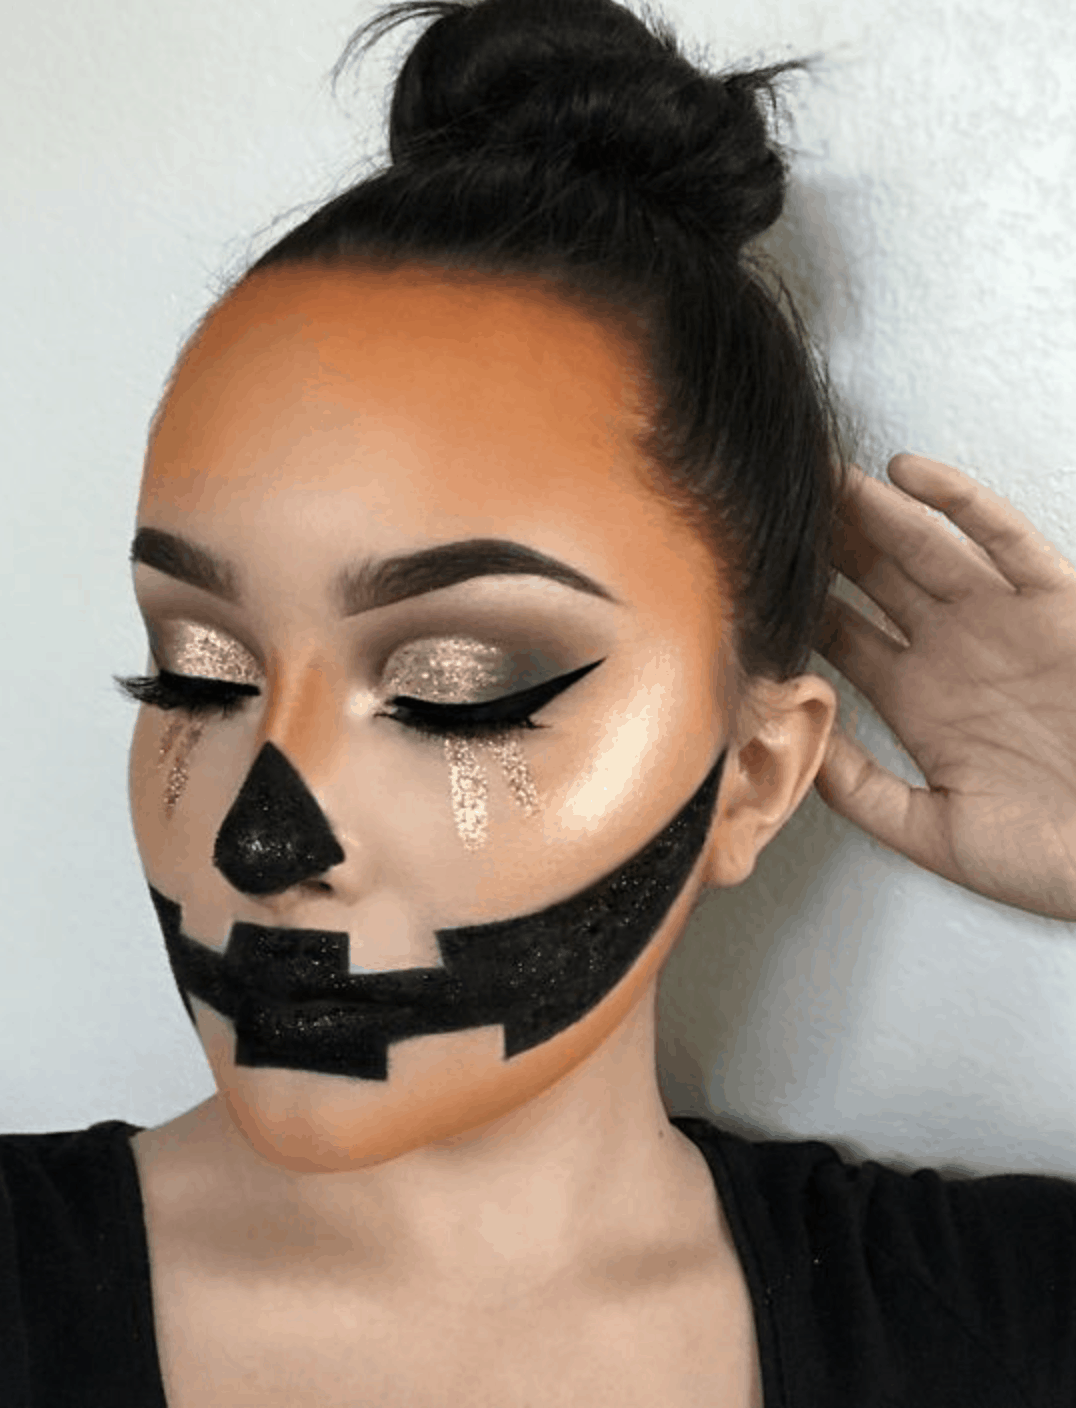 13 Easy Halloween Makeup Ideas to Try - An Unblurred Lady -   11 pumpkin makeup Halloween ideas